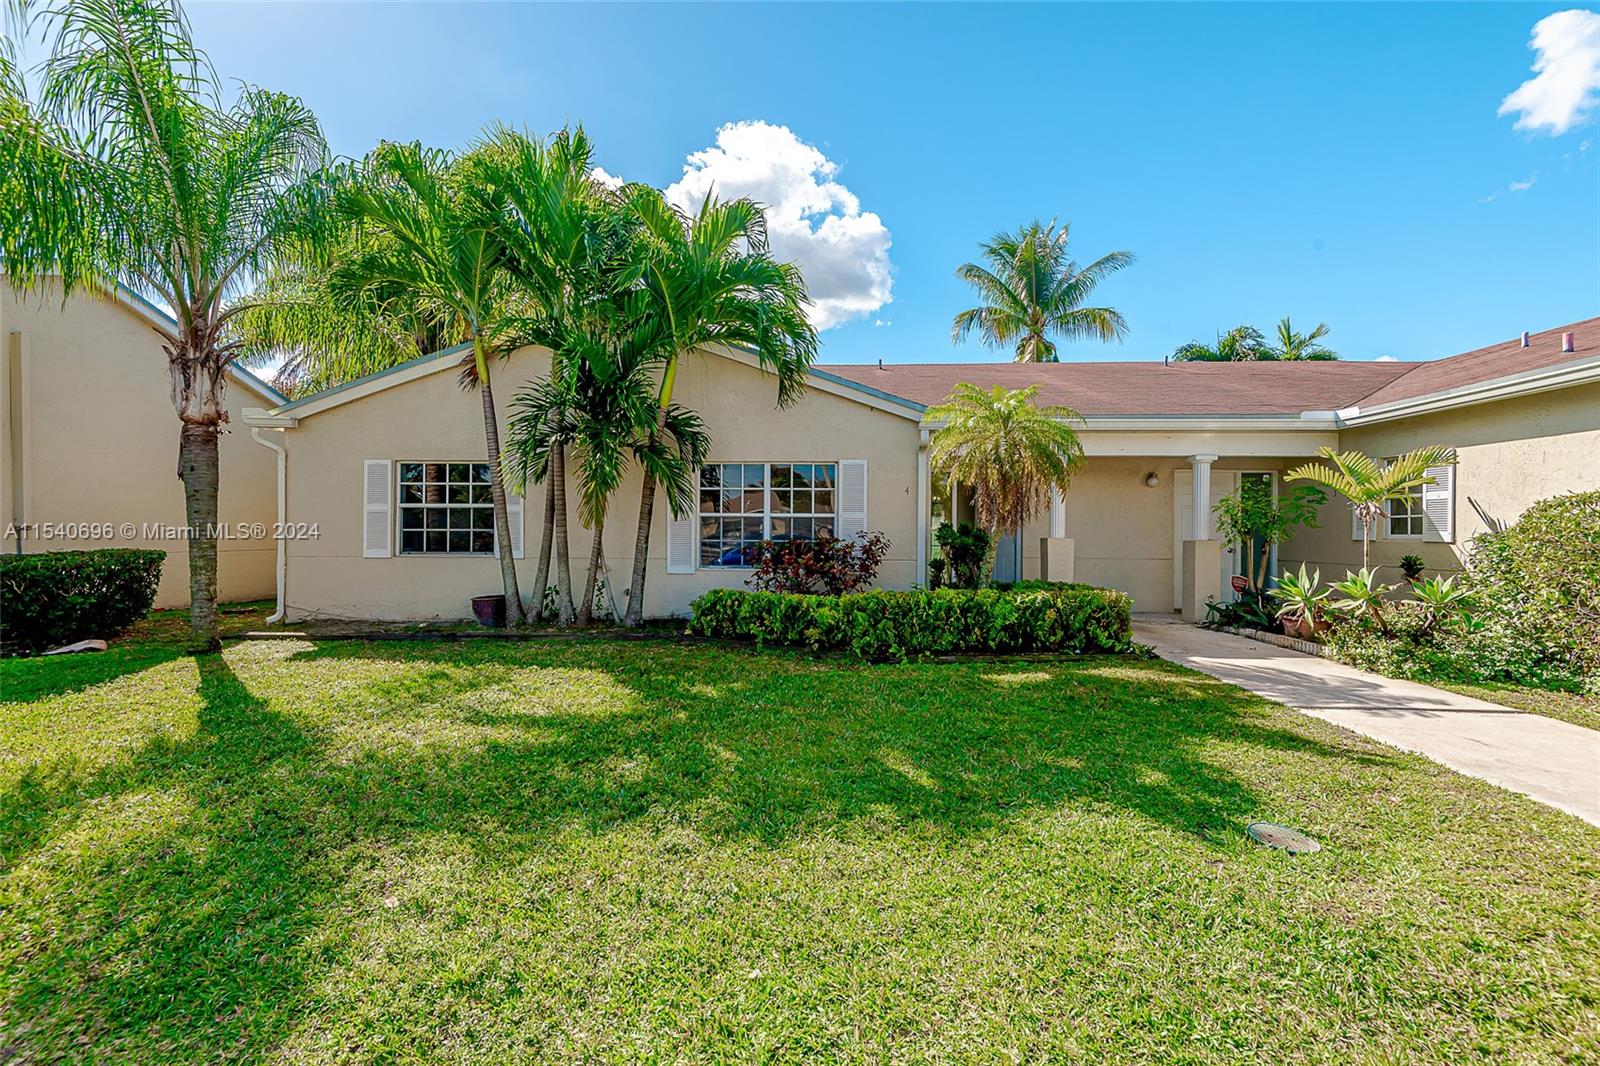 Property for Sale at 806 Ne 214th Ln Ln 806-04, Miami, Broward County, Florida - Bedrooms: 3 
Bathrooms: 2  - $320,000